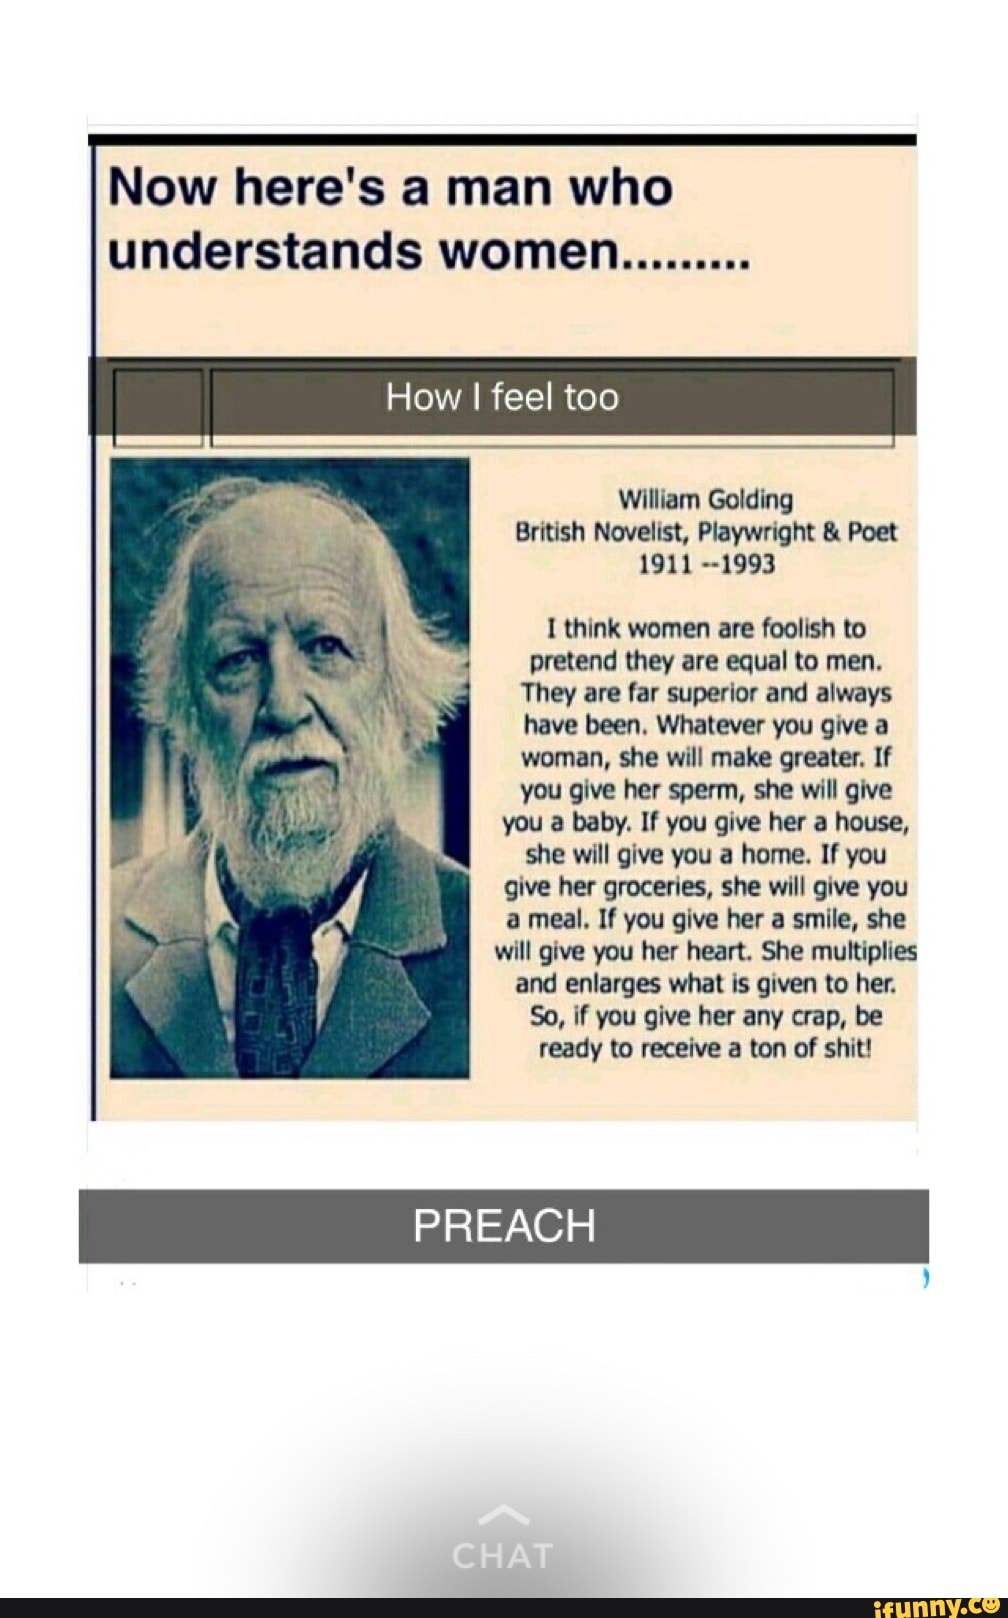 William golding on women